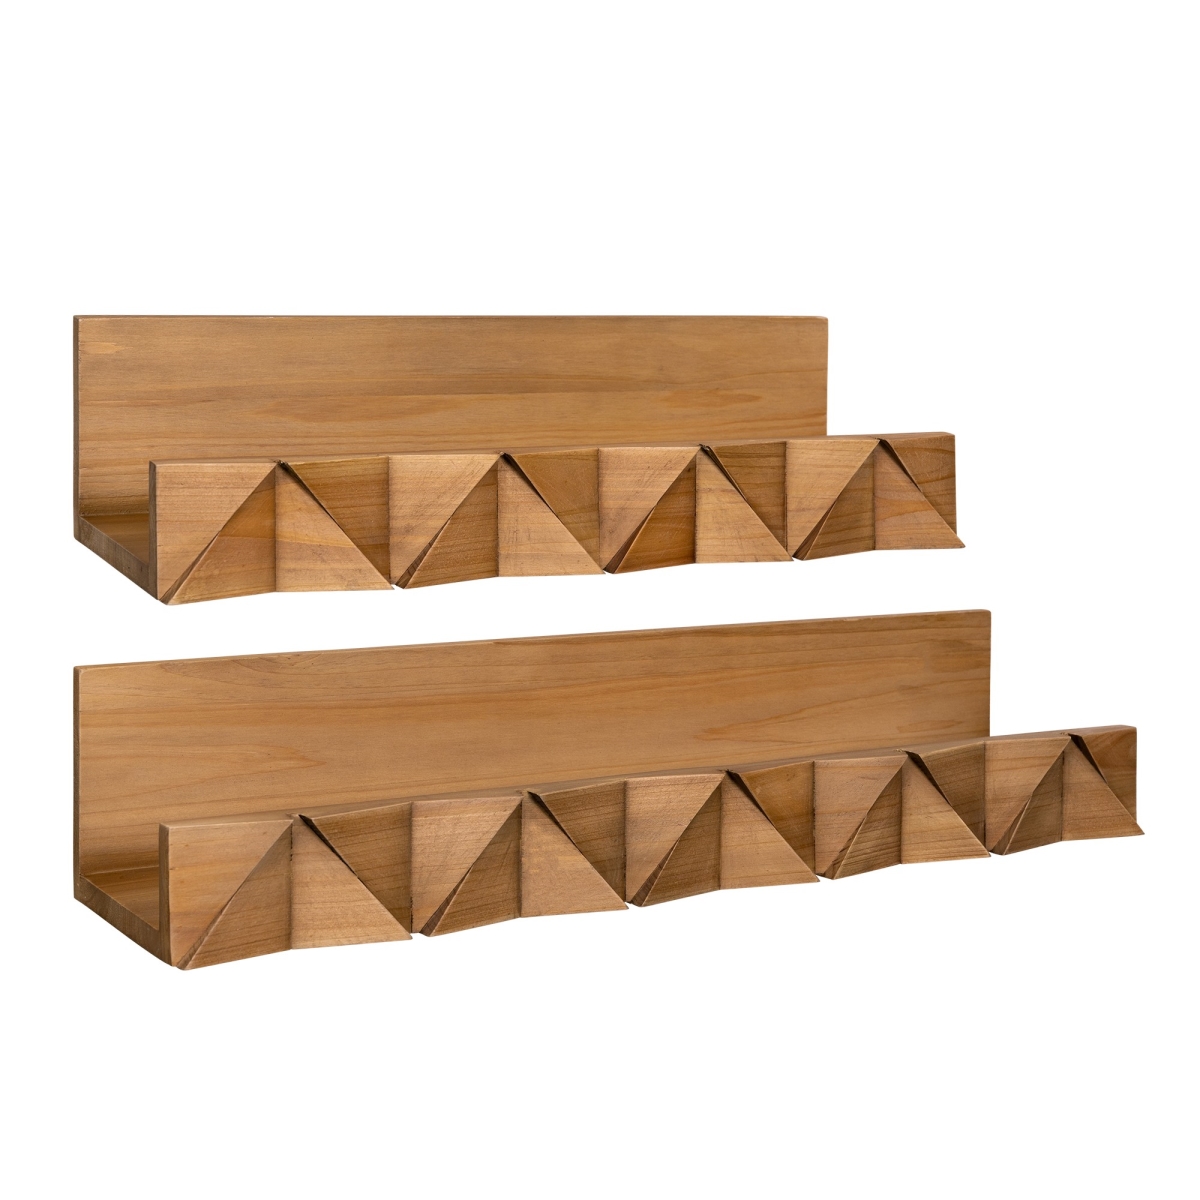 UPC 808230109223 product image for 402610 3D Wooden Ledge Wall Shelves - Set of 2 | upcitemdb.com